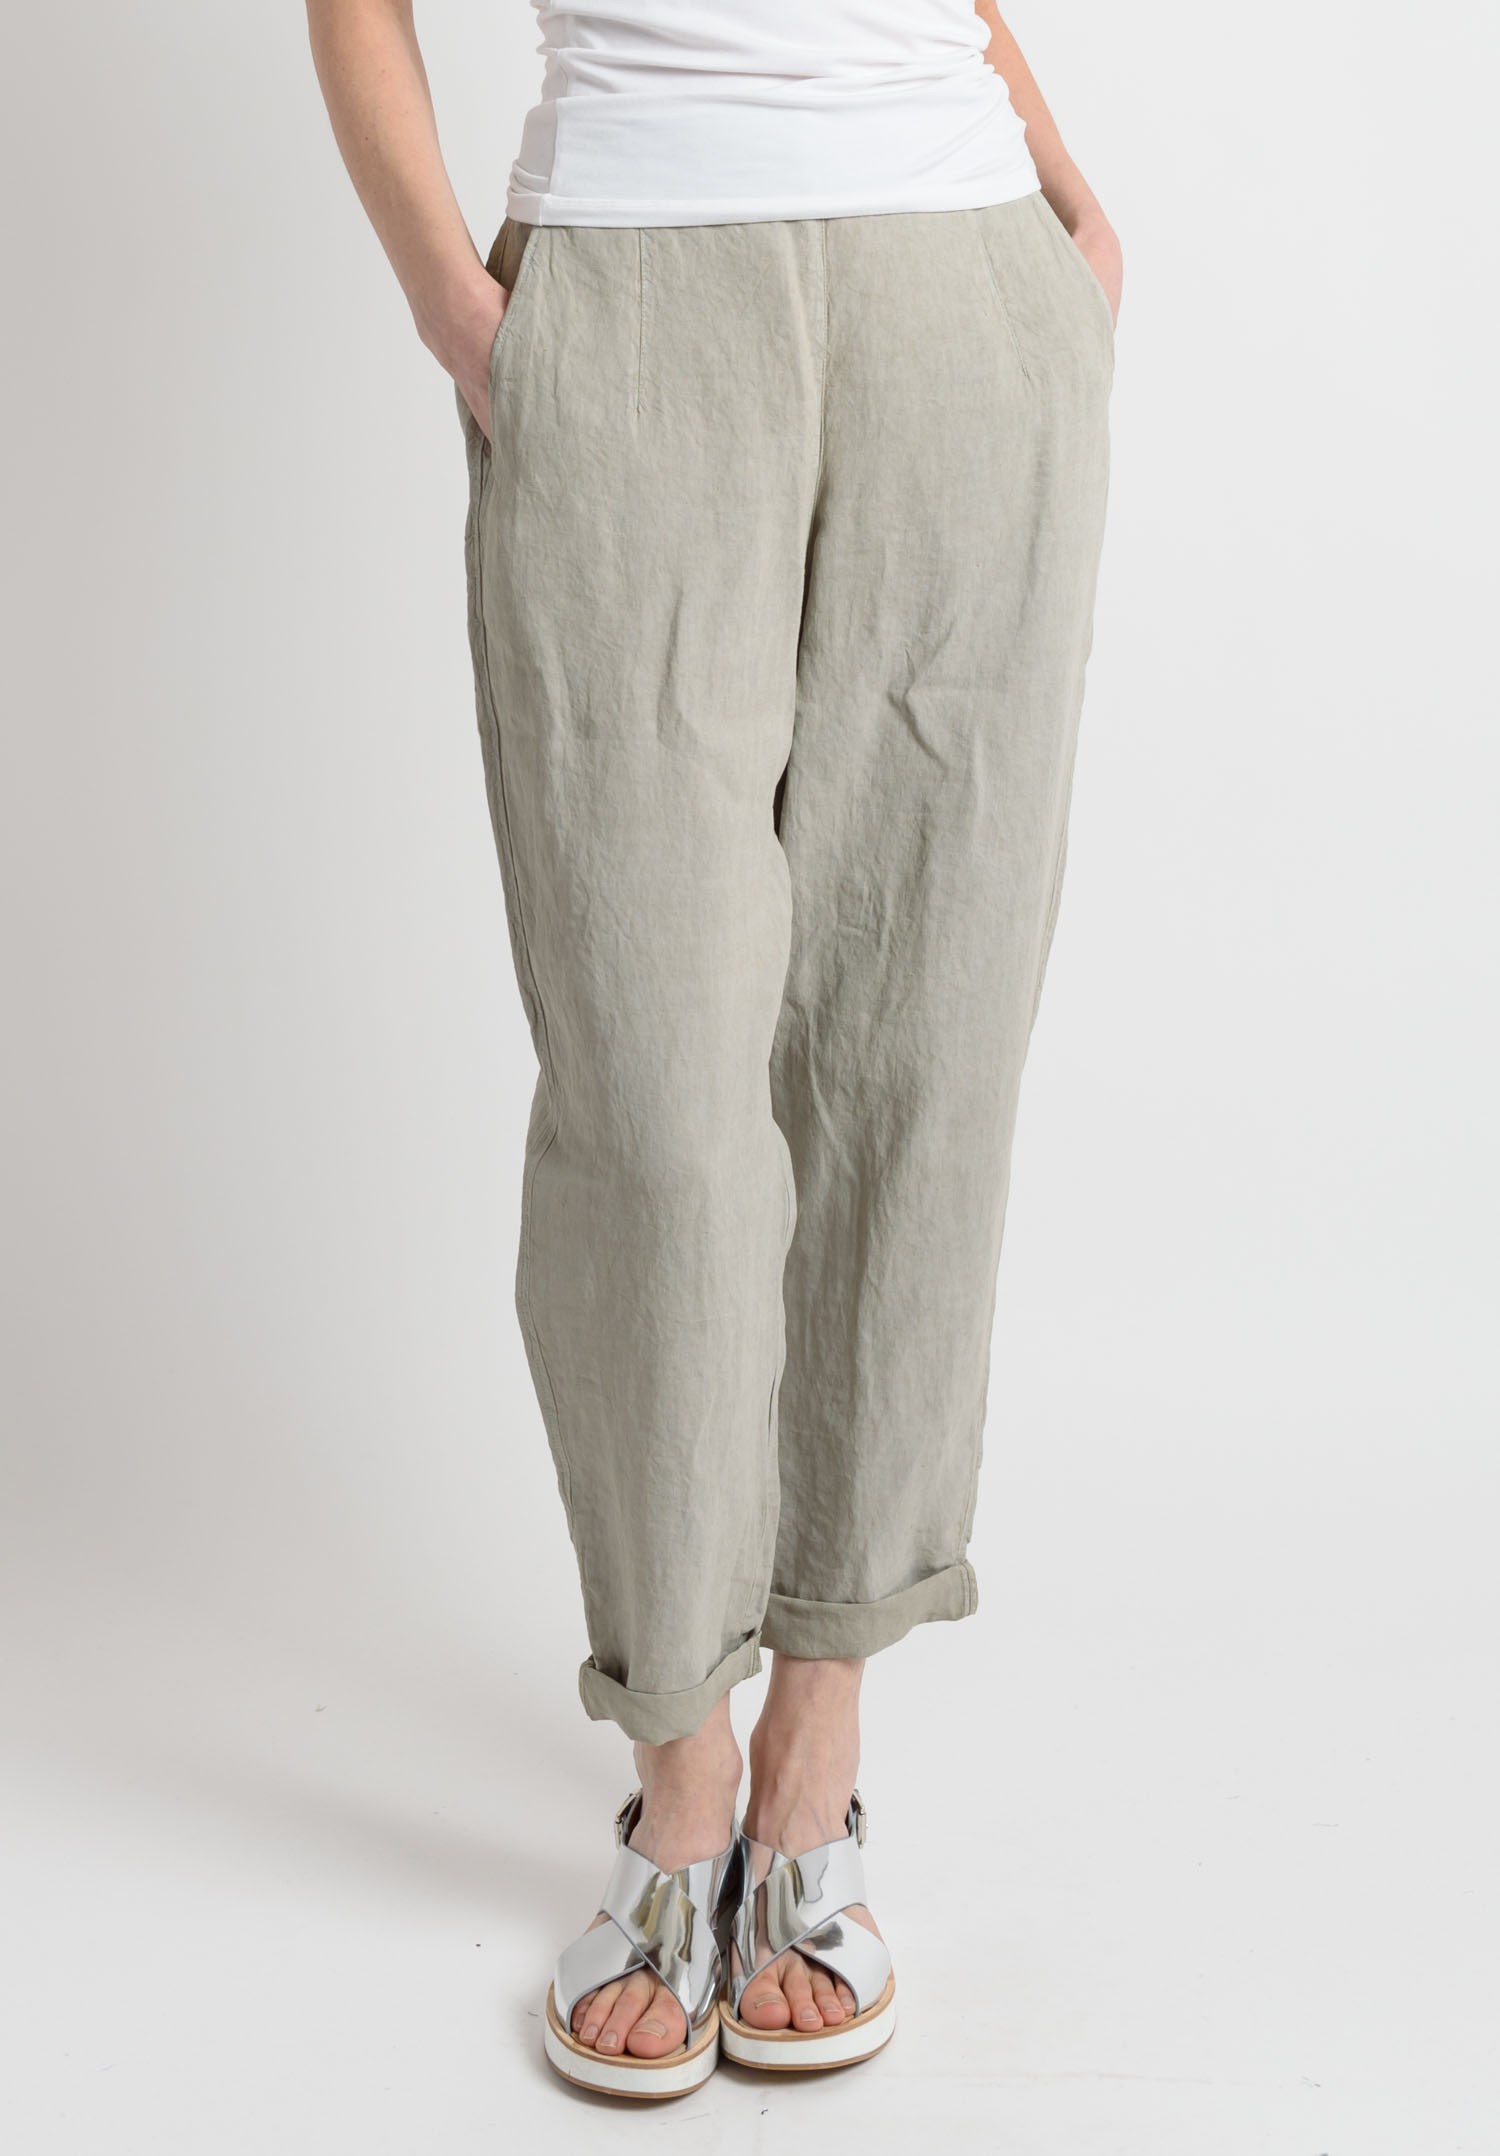 harapeco】Oneside Line Tapered Pants 正規品・日本製